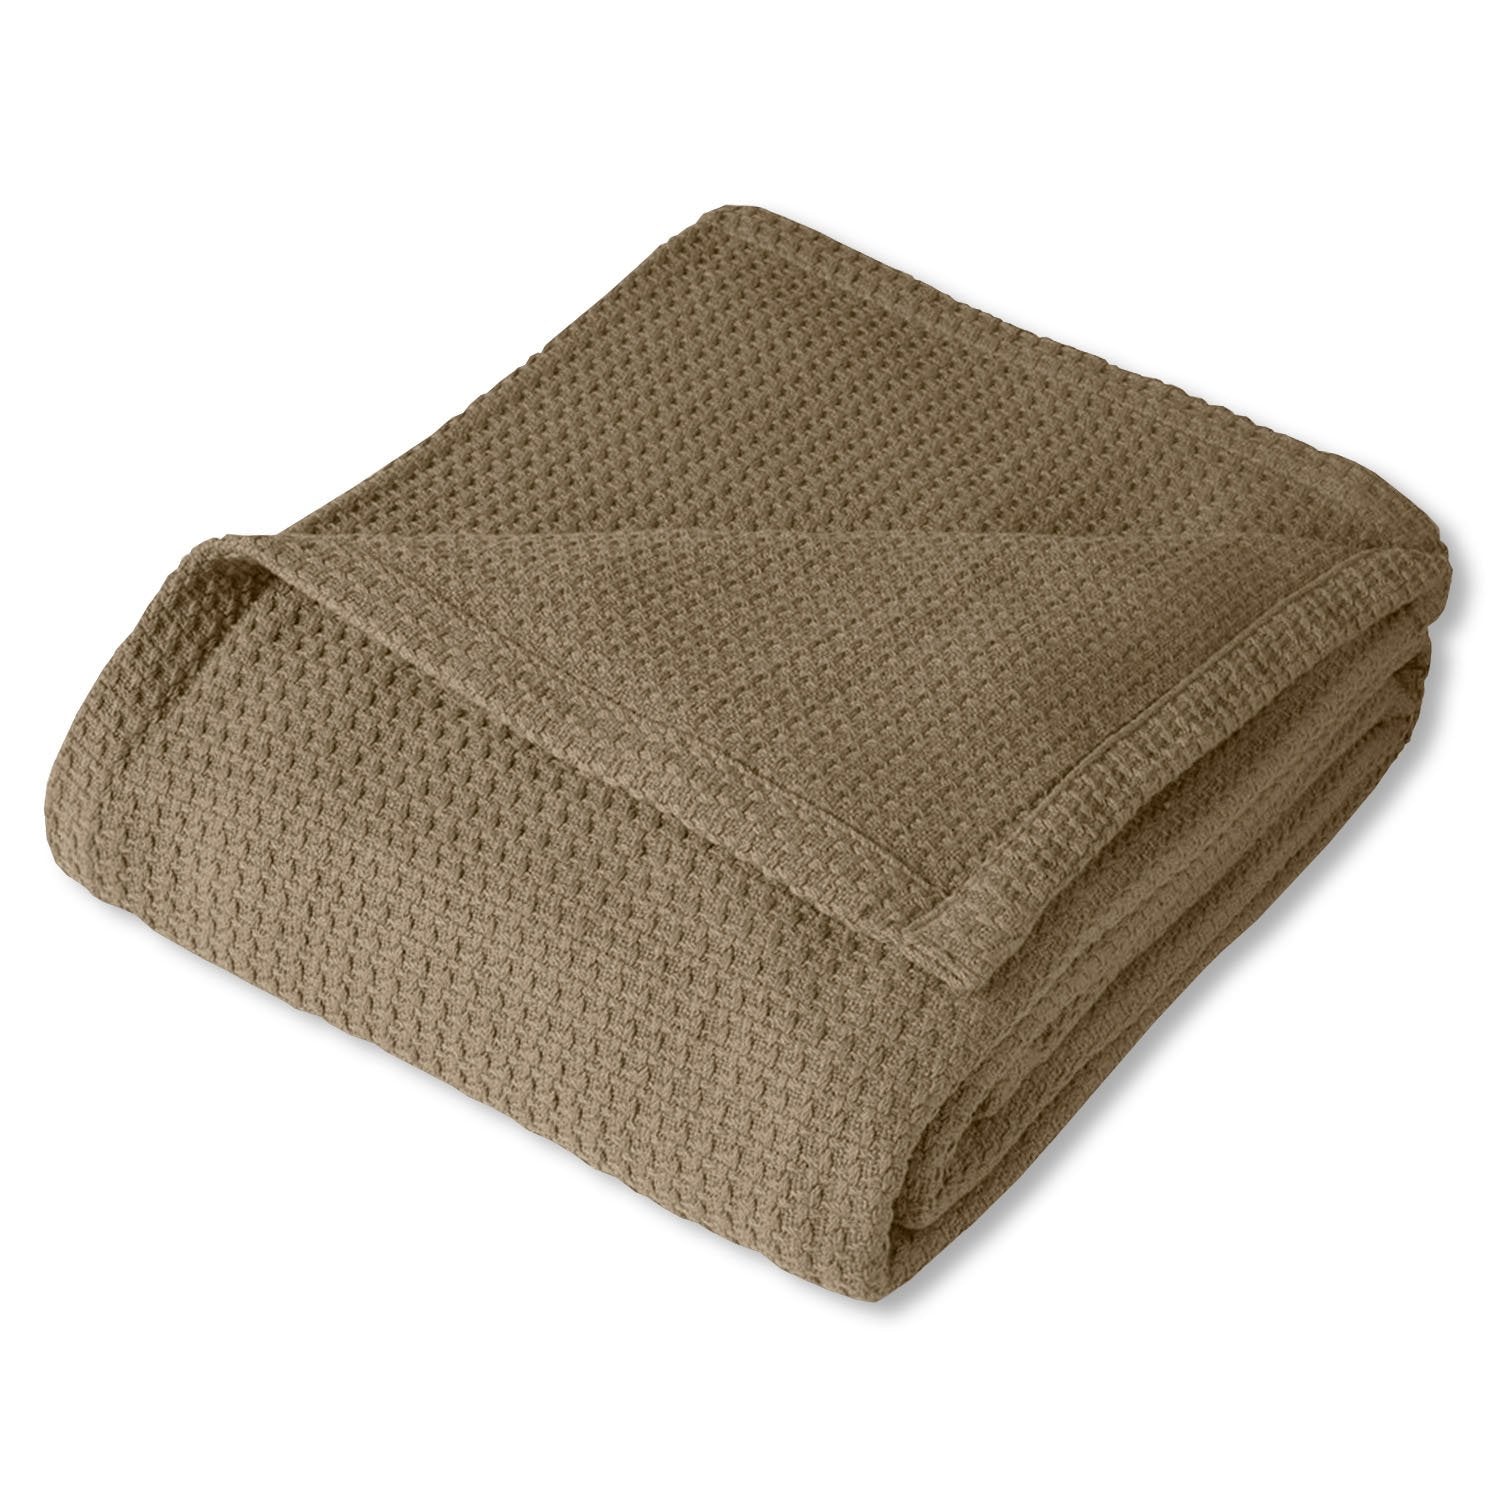 Basket Weave Cotton Blanket Taupe - Folded